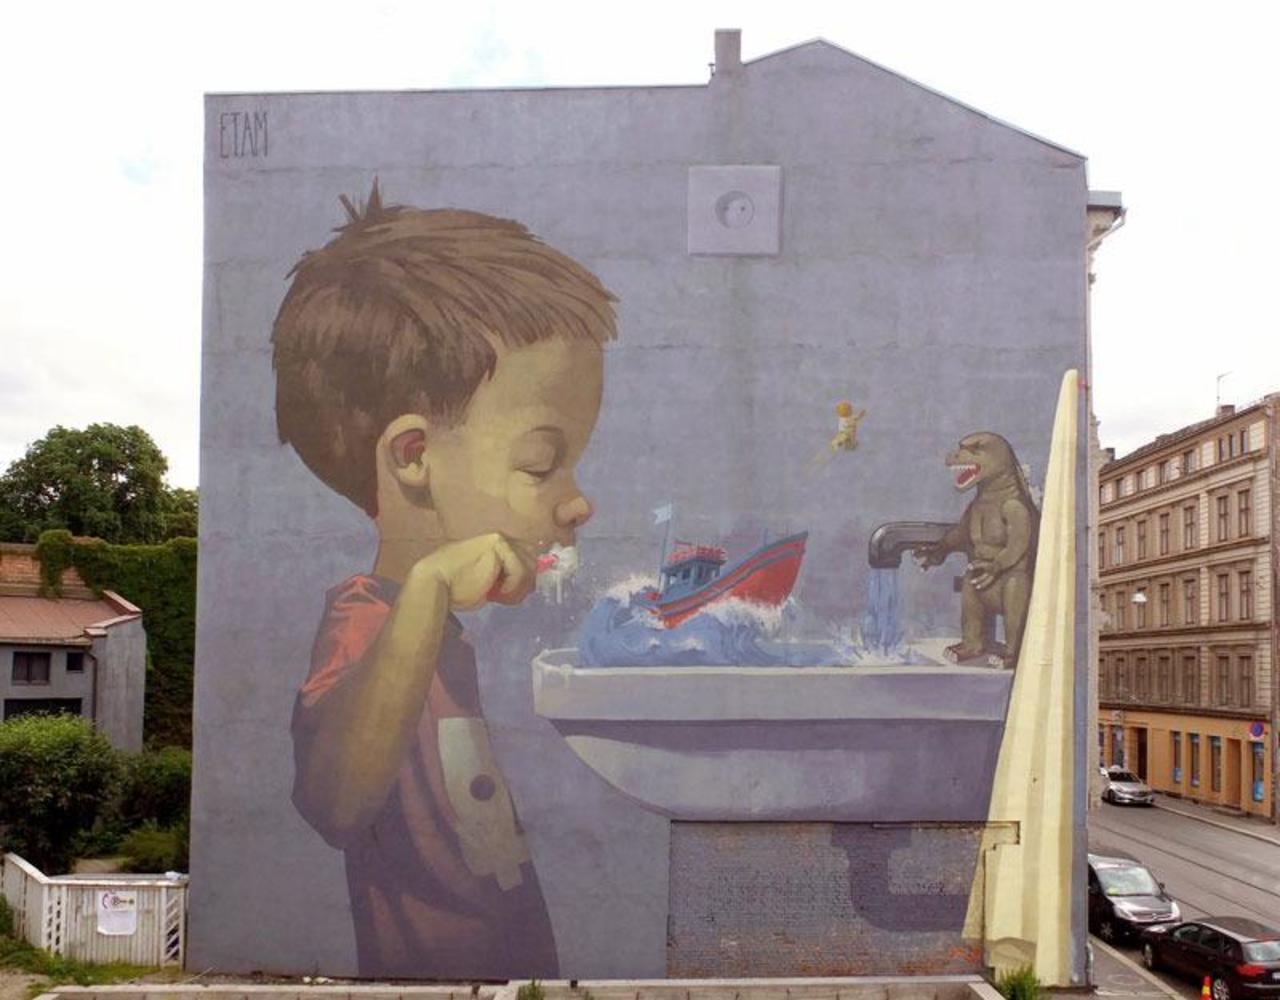 Awesome work by Etam Cru. Find more: http://bit.ly/1wAYCVW #streetart #urban https://t.co/awag7gYnJ1